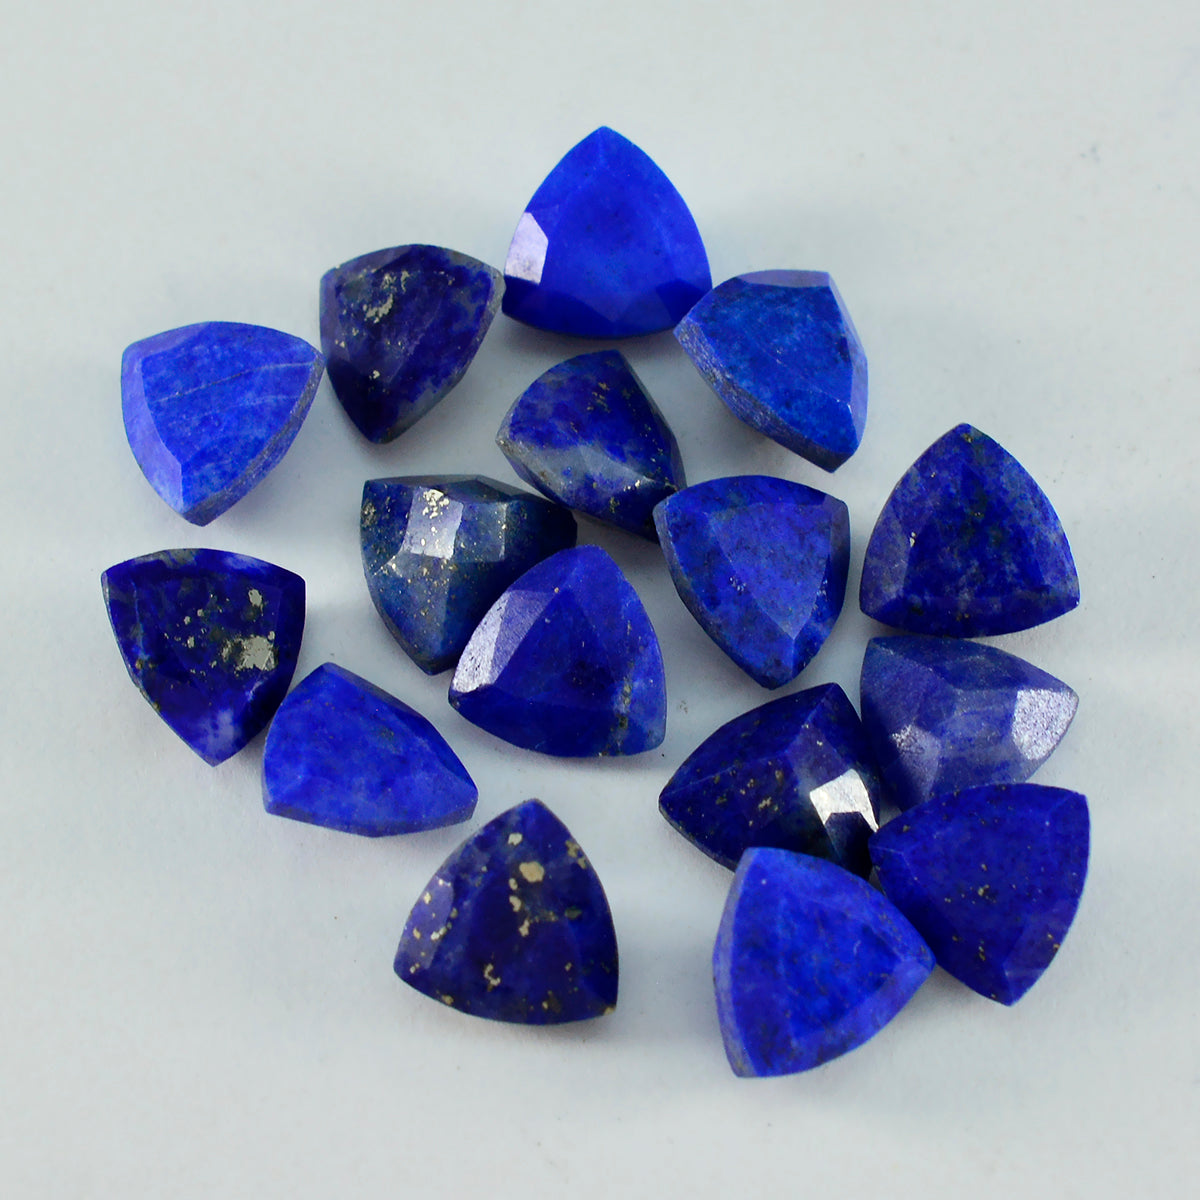 Riyogems 1PC Real Blue Lapis Lazuli Faceted 6x6 mm Trillion Shape awesome Quality Loose Gem